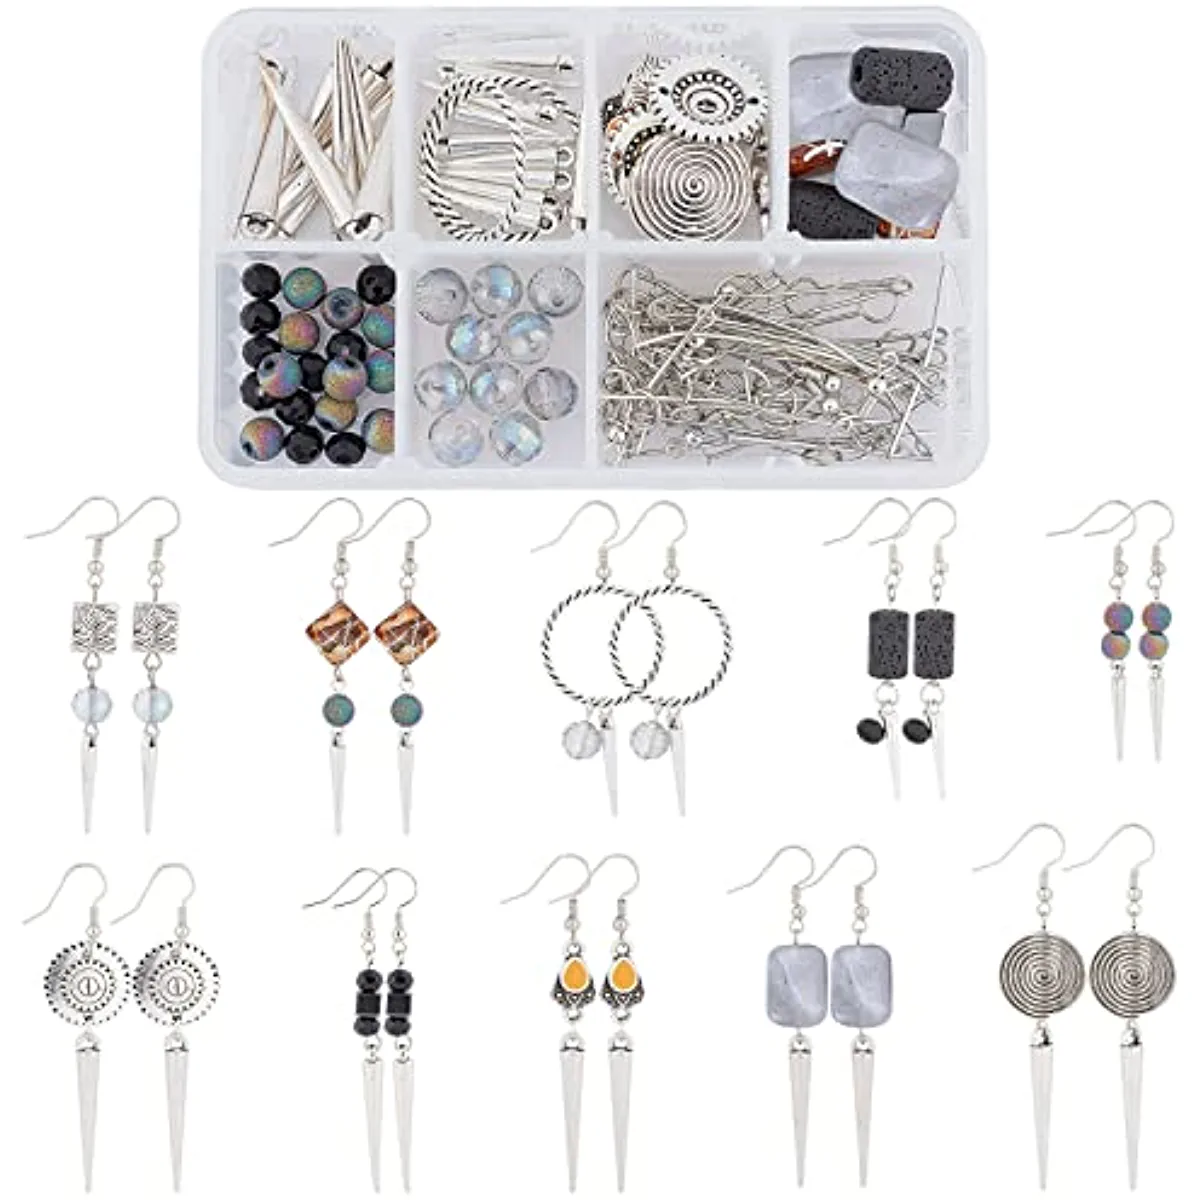 1 Box DIY 10 Pairs Bohemian Earring Making Kit Spike Dangle Earrings Tibetan Style Pendants Polished Jewelry Findings Set for Women DIY Earring Crafts Making - image 1 of 7